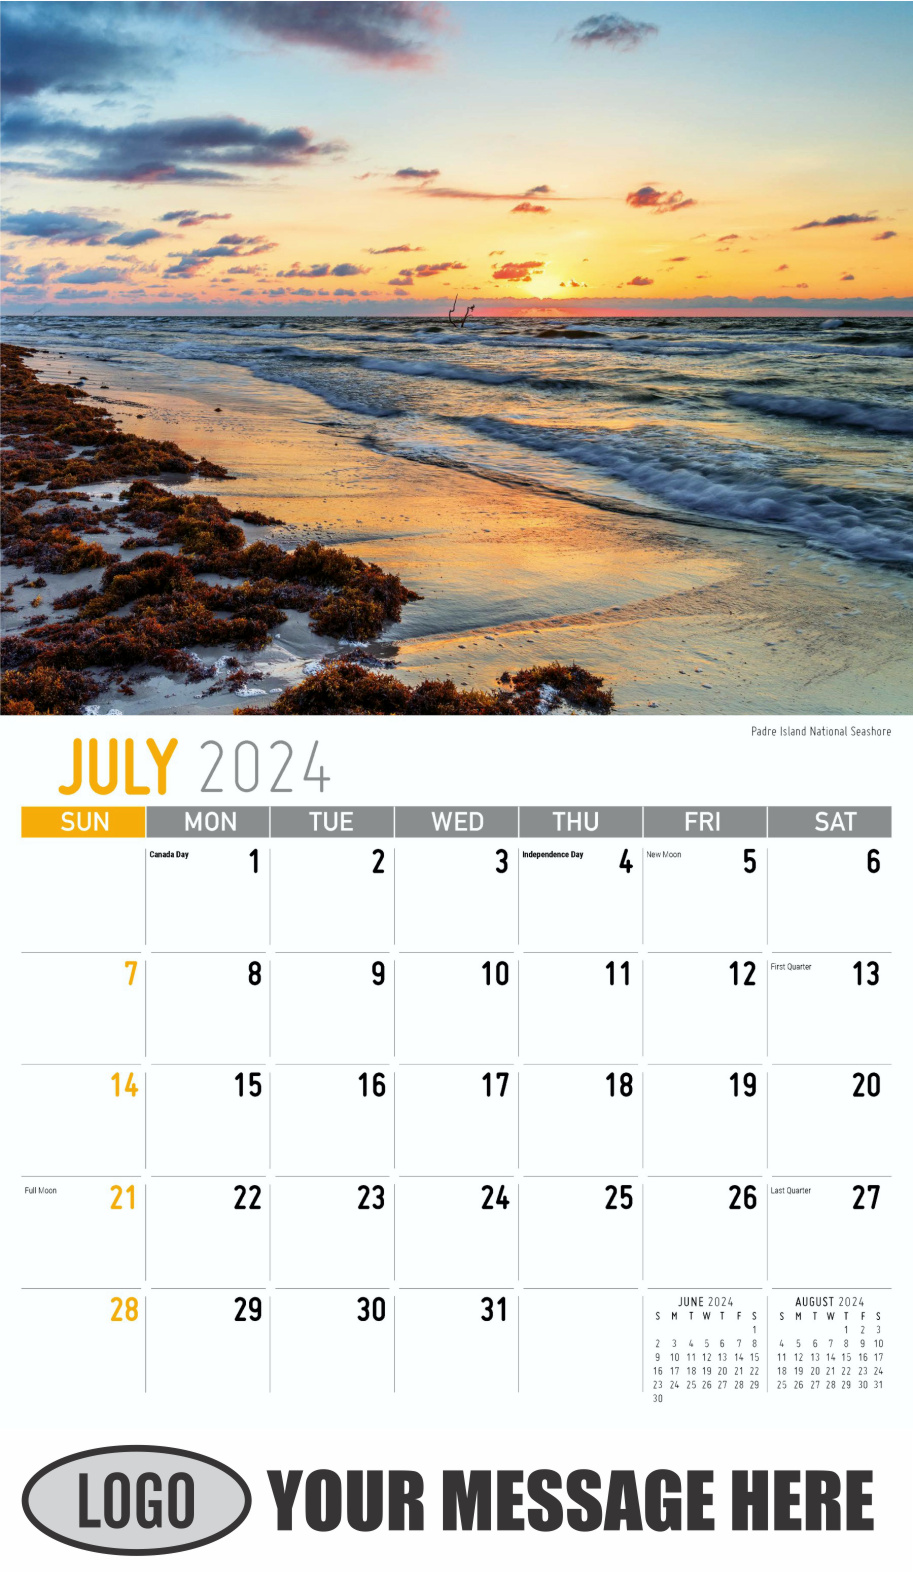 Scenes of Texas 2024 Business Advertising Calendar - July